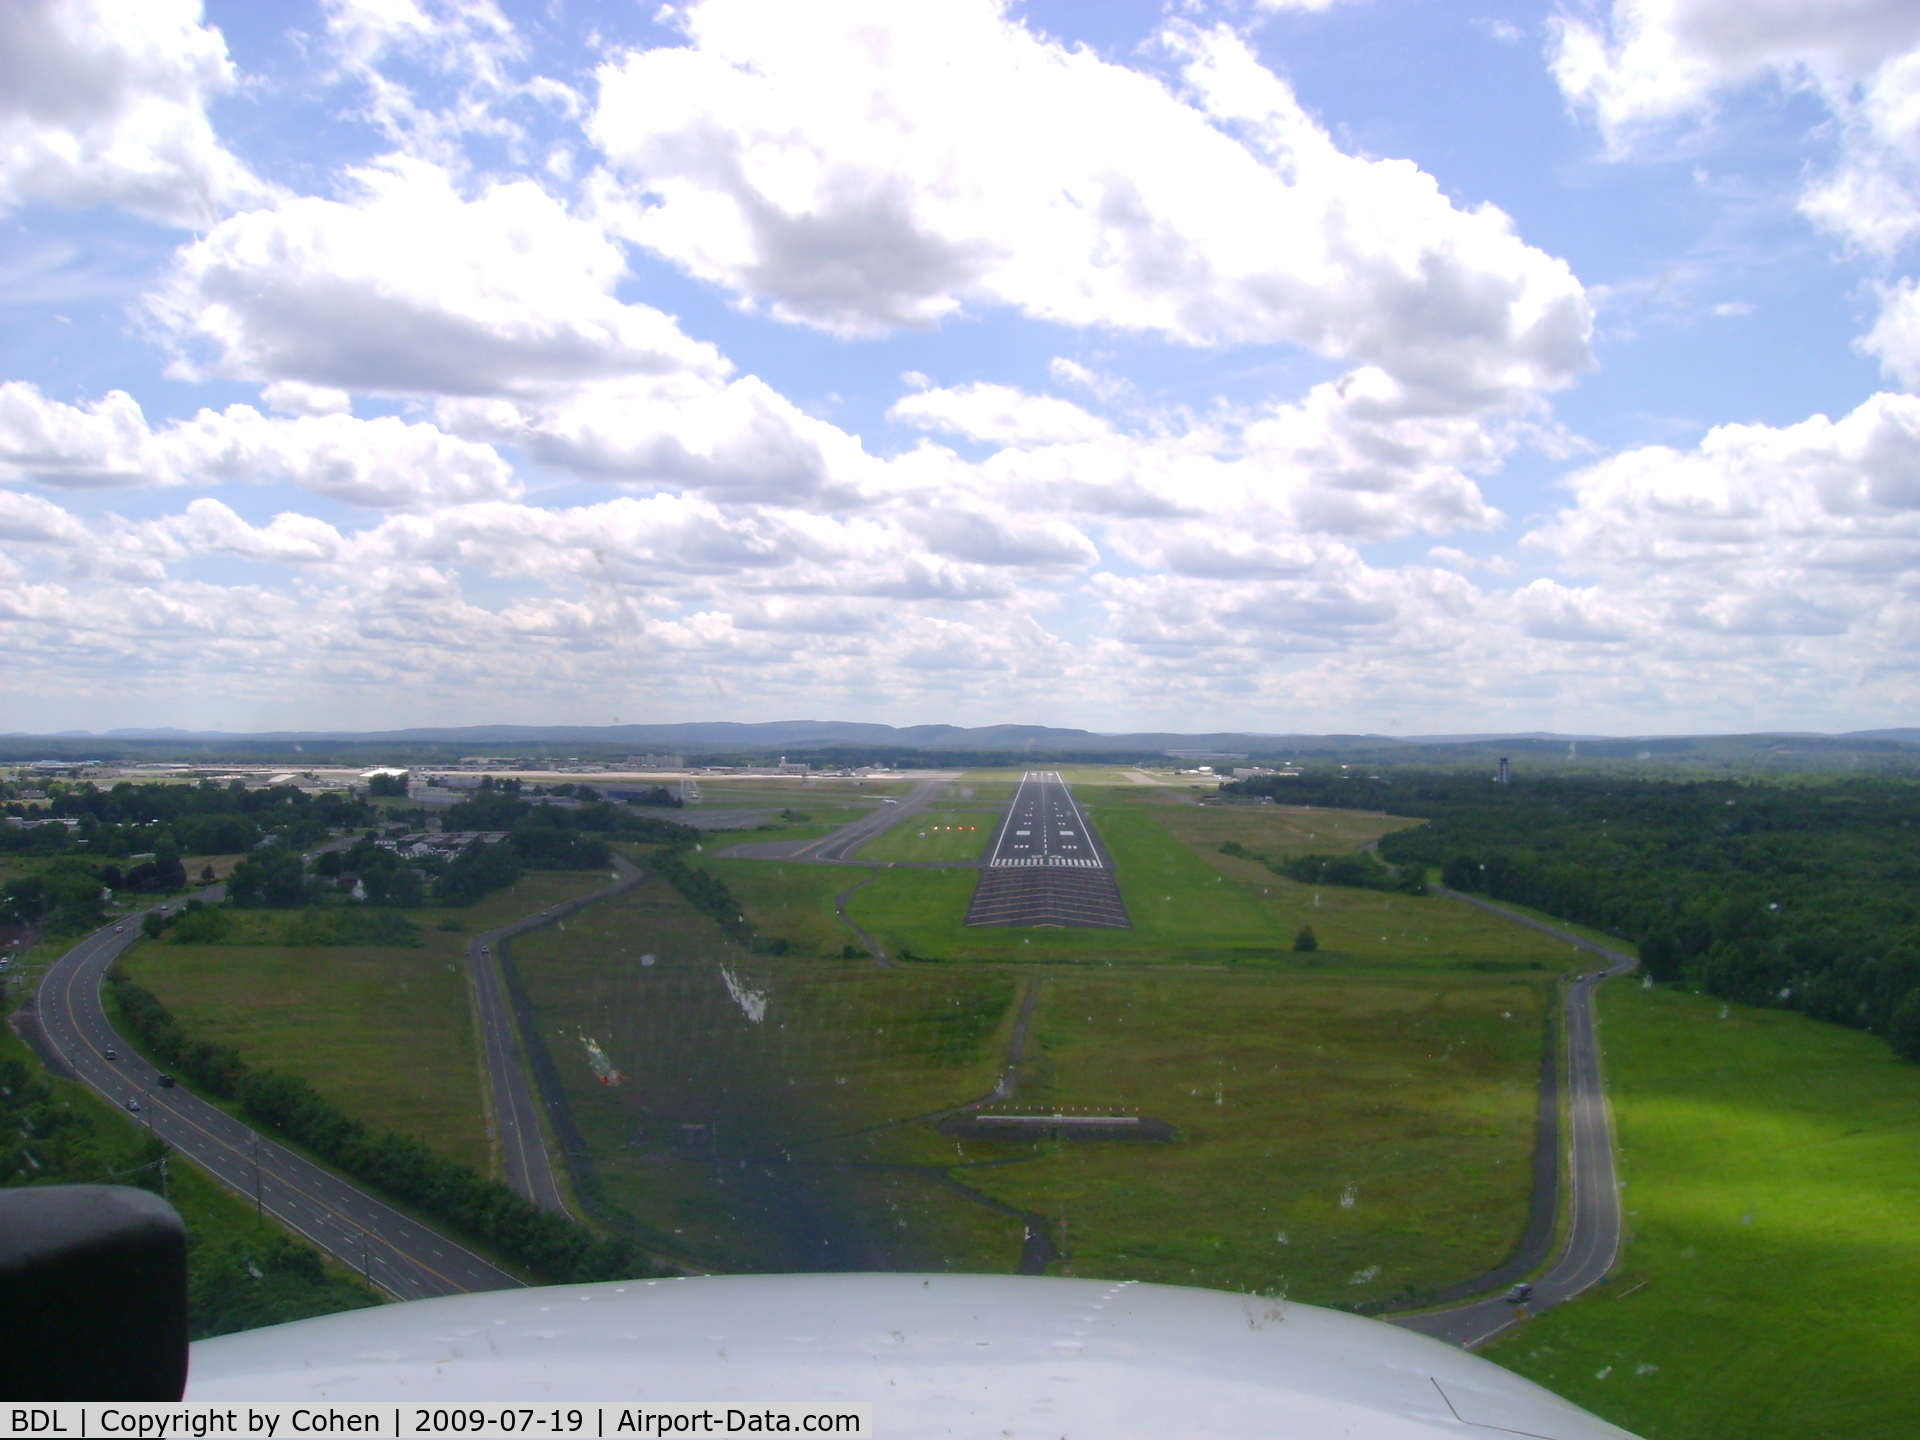 Bradley International Airport (BDL) - On short final runway 24 at Bradley Airport